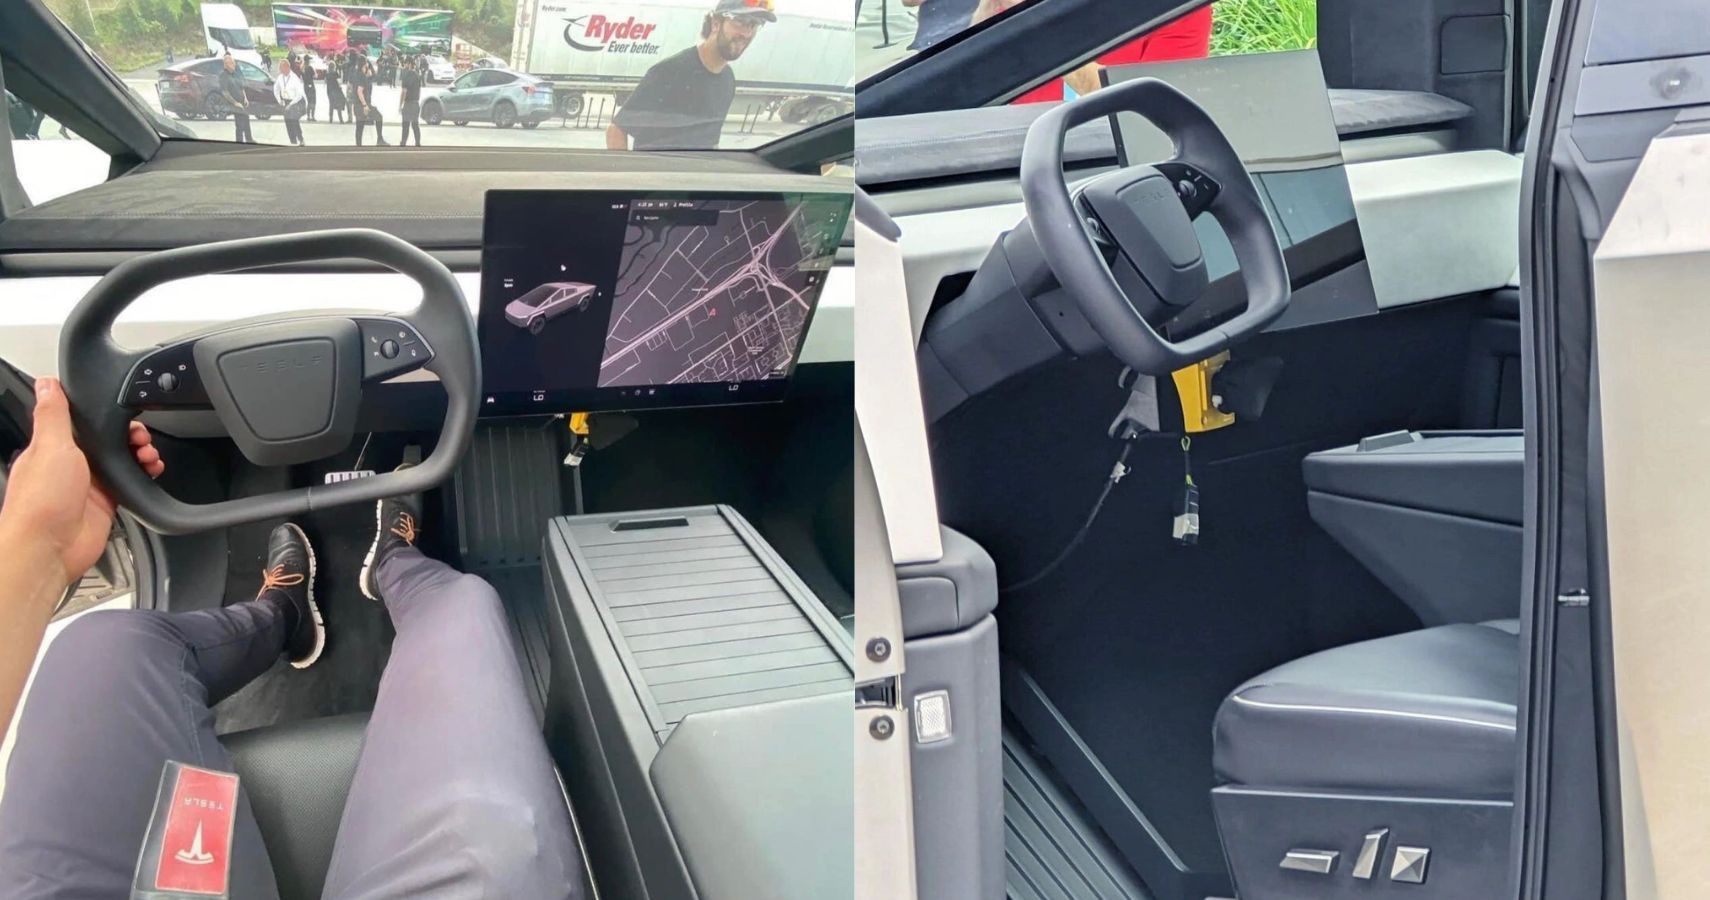 Tesla Cybertruck interior leaked photos